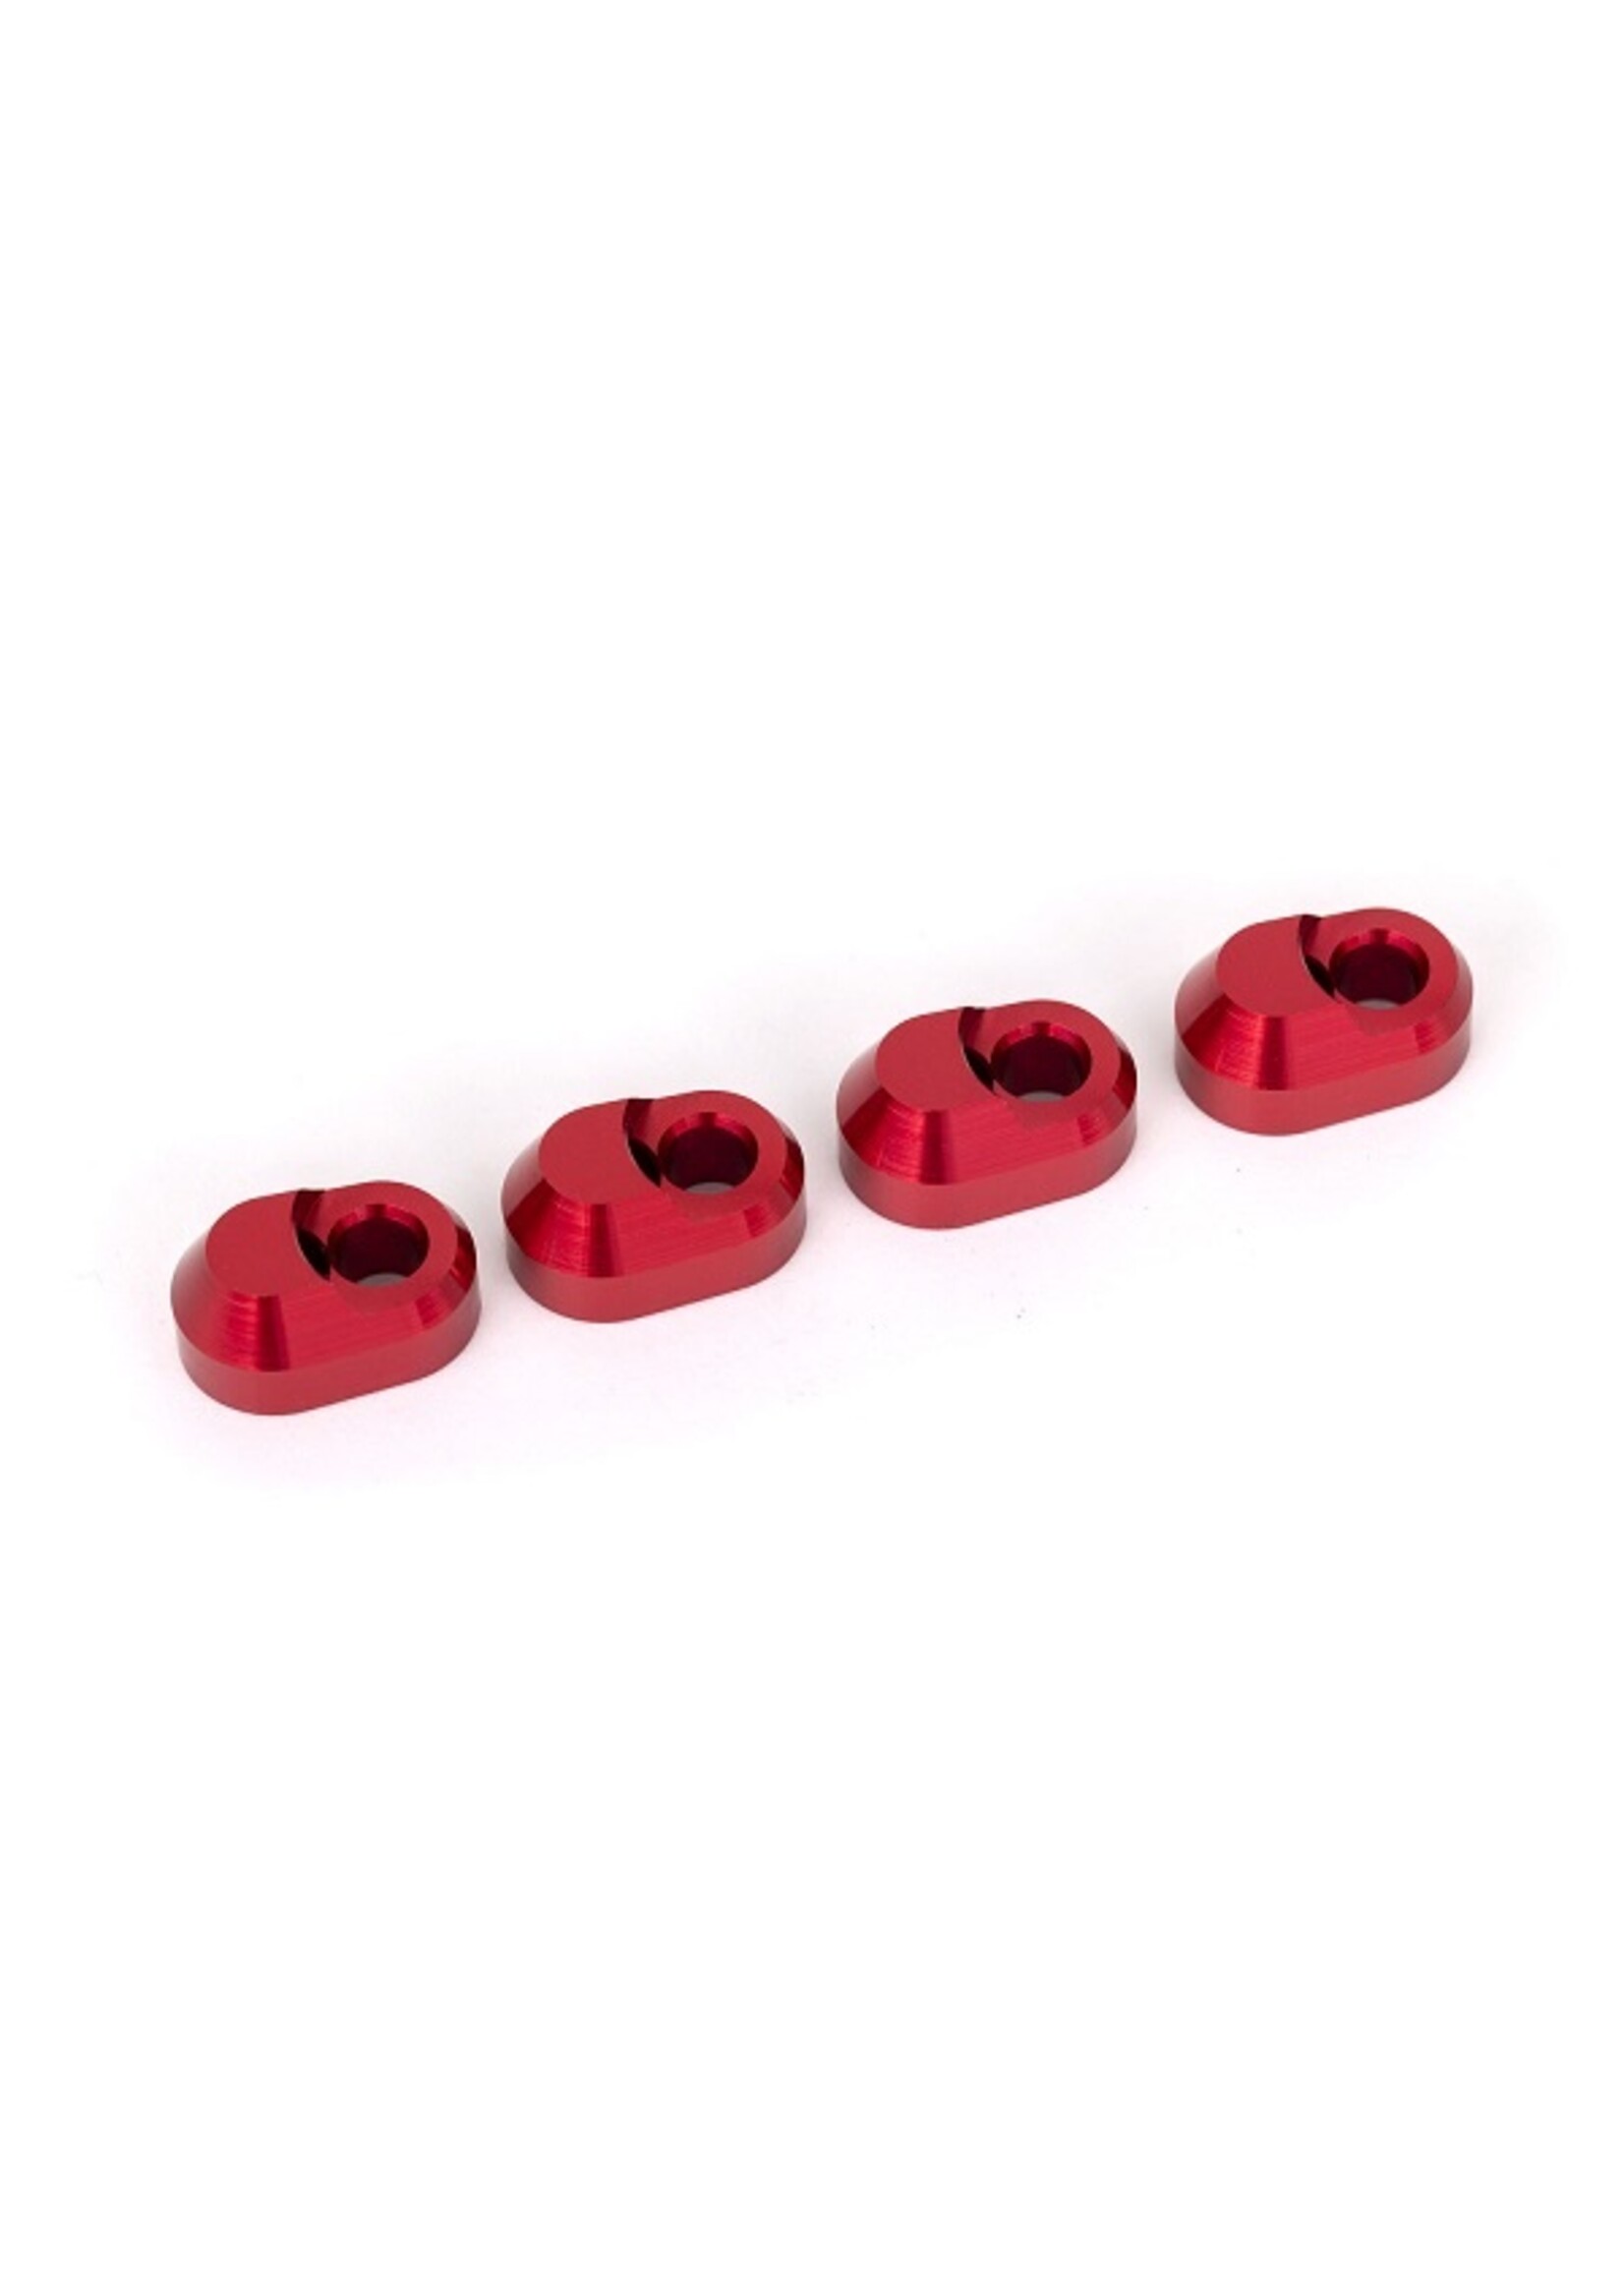 Traxxas 7743-RED - Aluminum Suspension Pin Retainer - Red